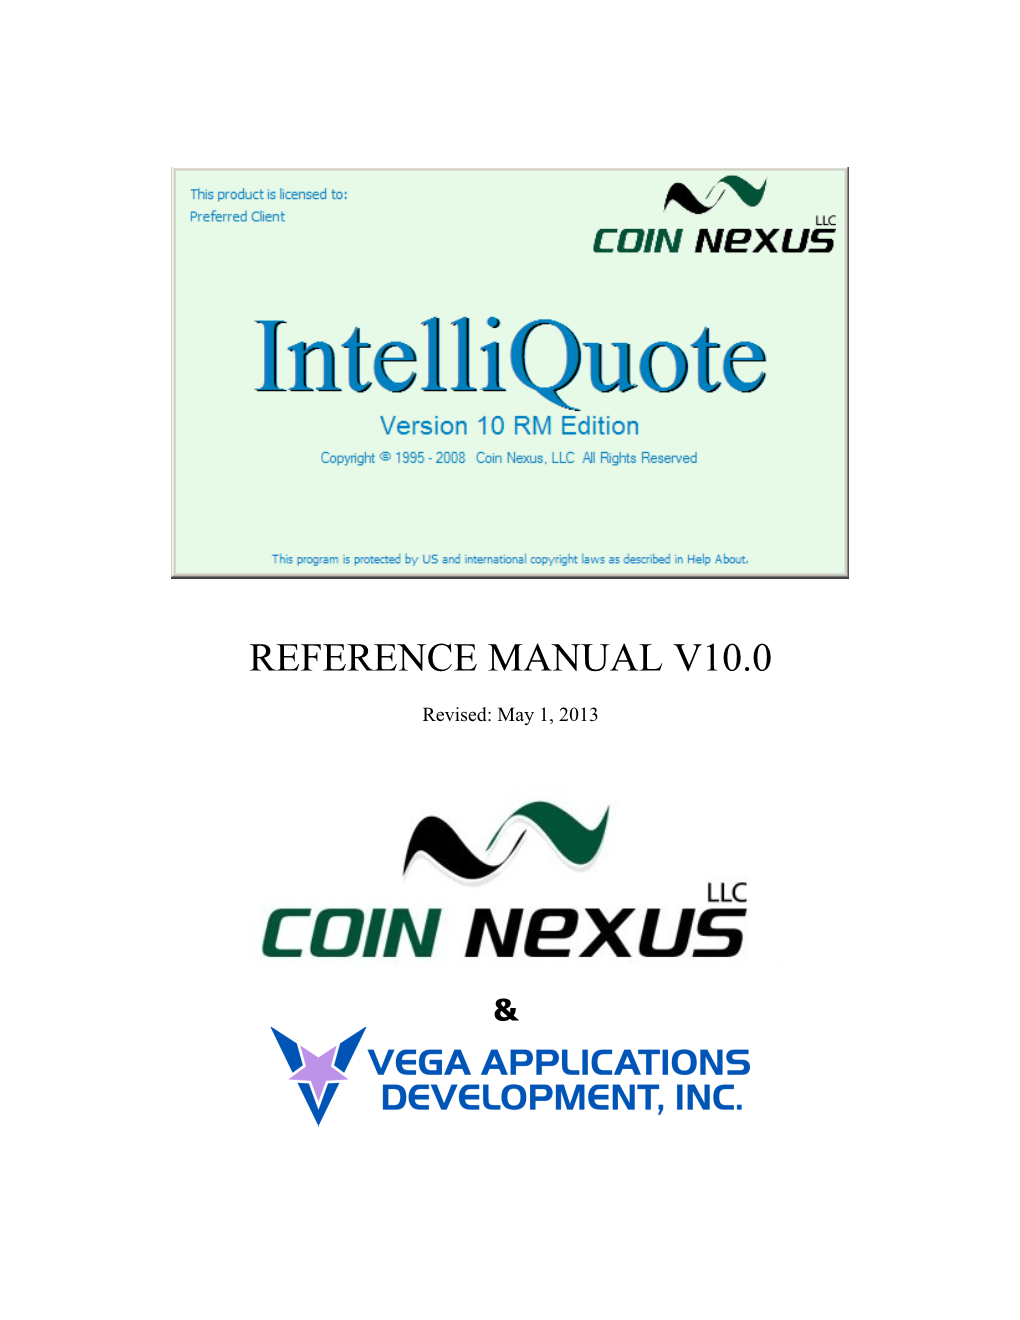 Reference Manual V10.0